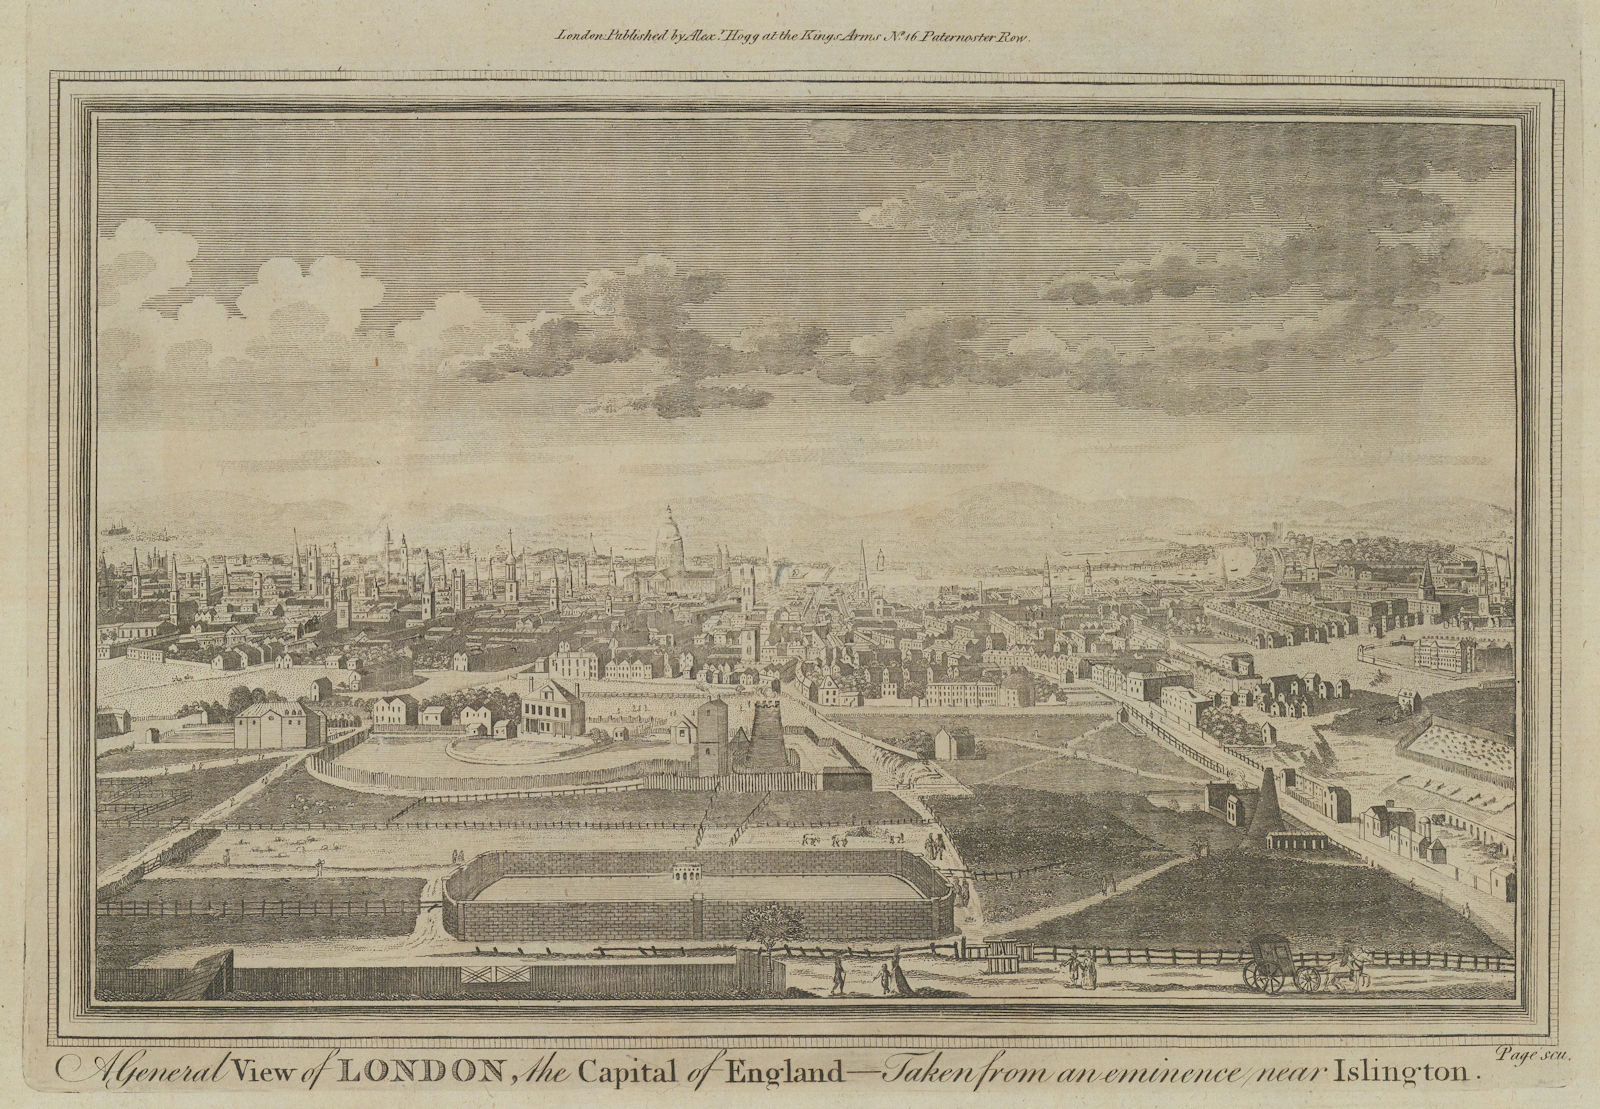 A general view of London… taken from an eminence near Islington. THORNTON 1784